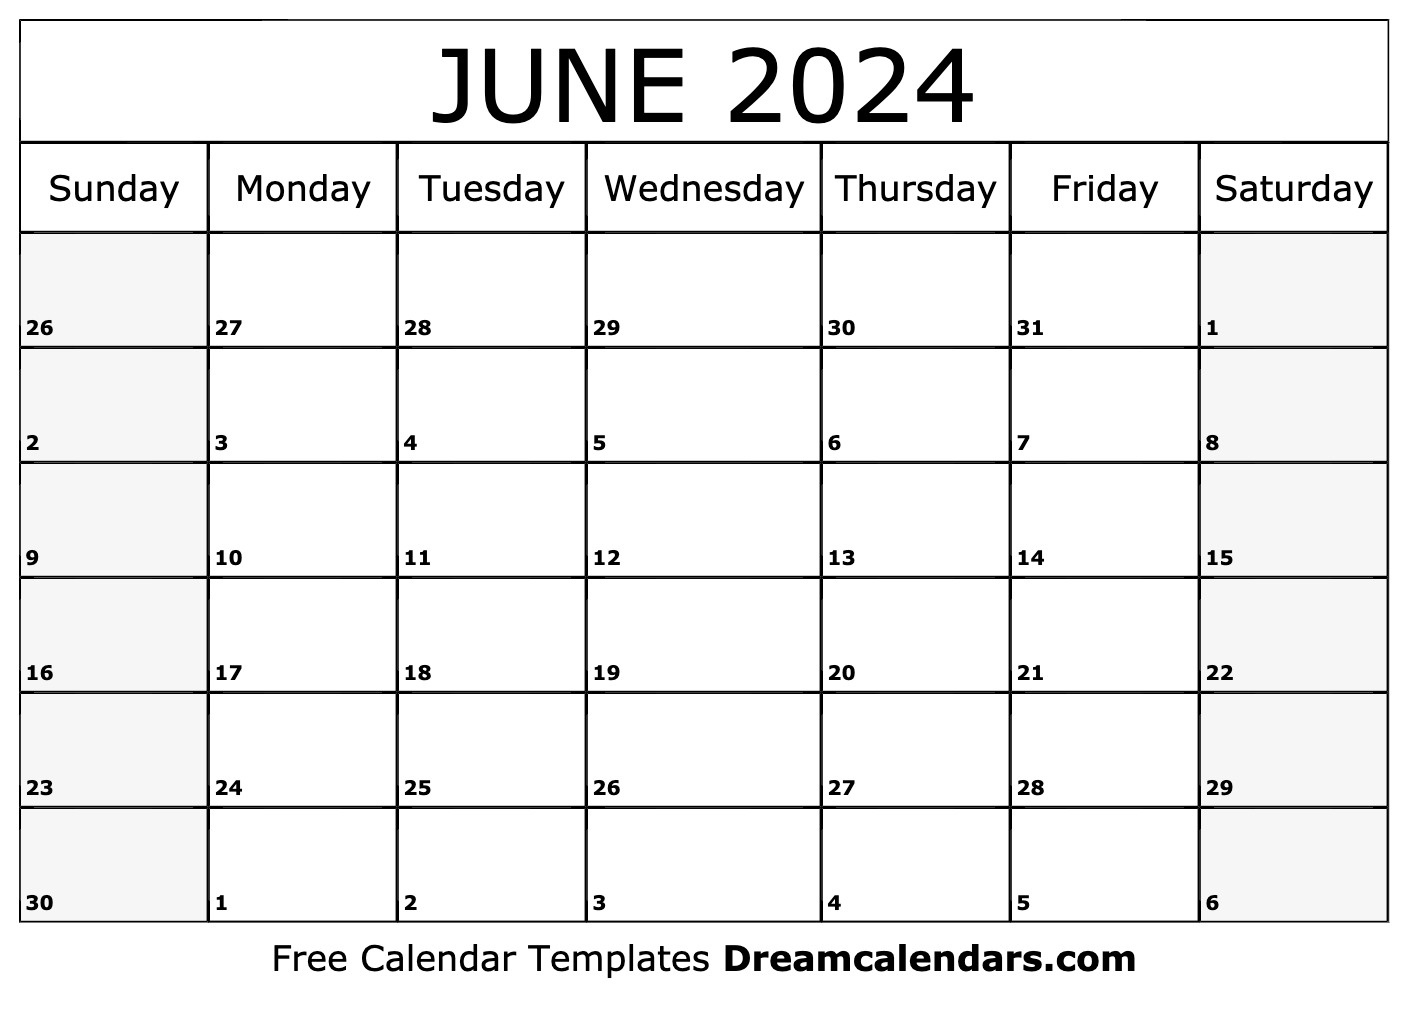 June 2024 Calendar - Free Printable With Holidays And Observances regarding June 30 2024 Calendar